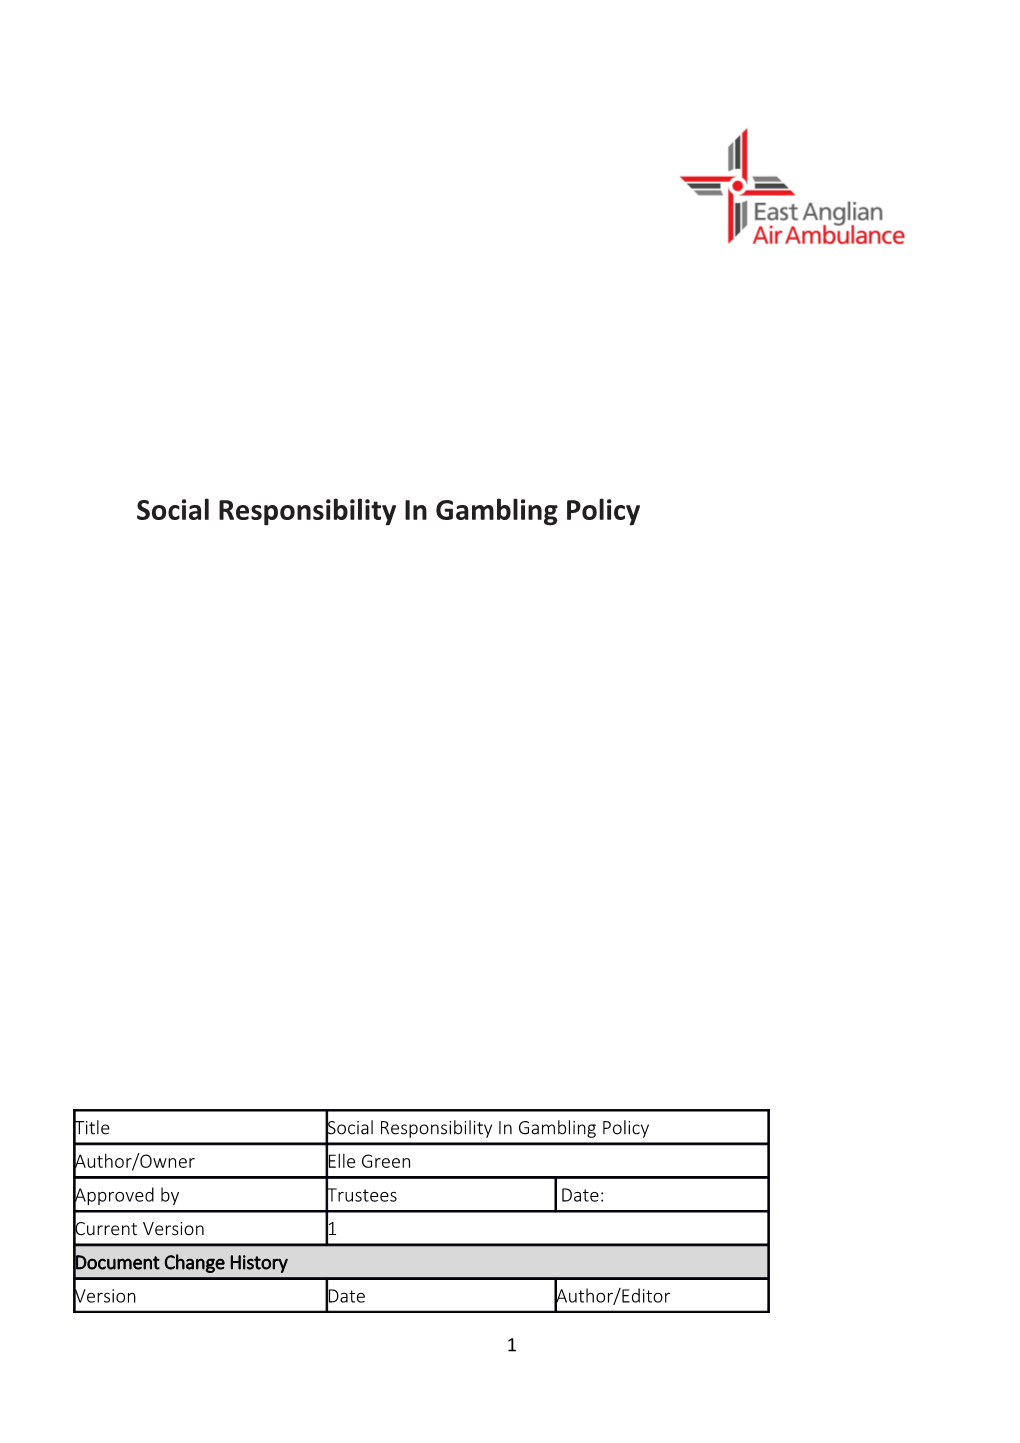 Social Responsibility in Gambling Policy